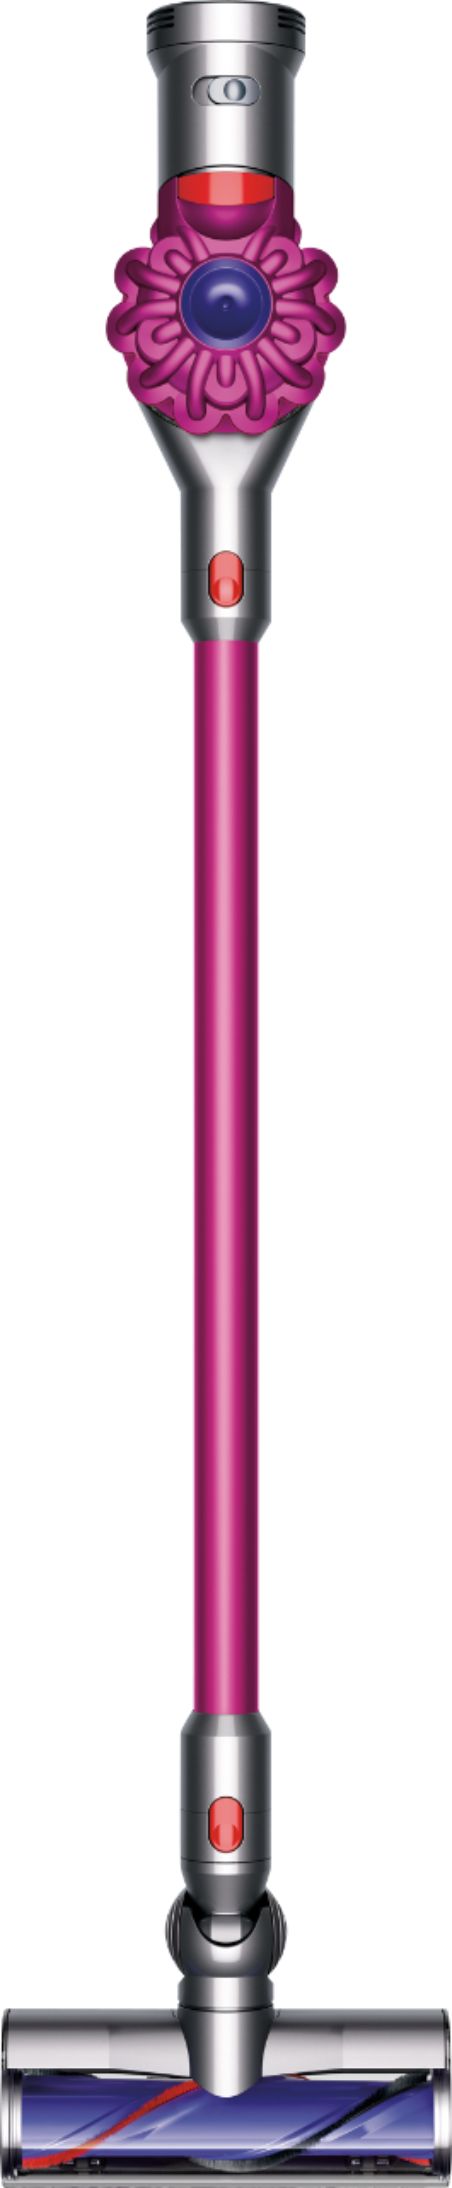 Best Buy: Dyson V7 Cord-Free Stick Vacuum 227591-01